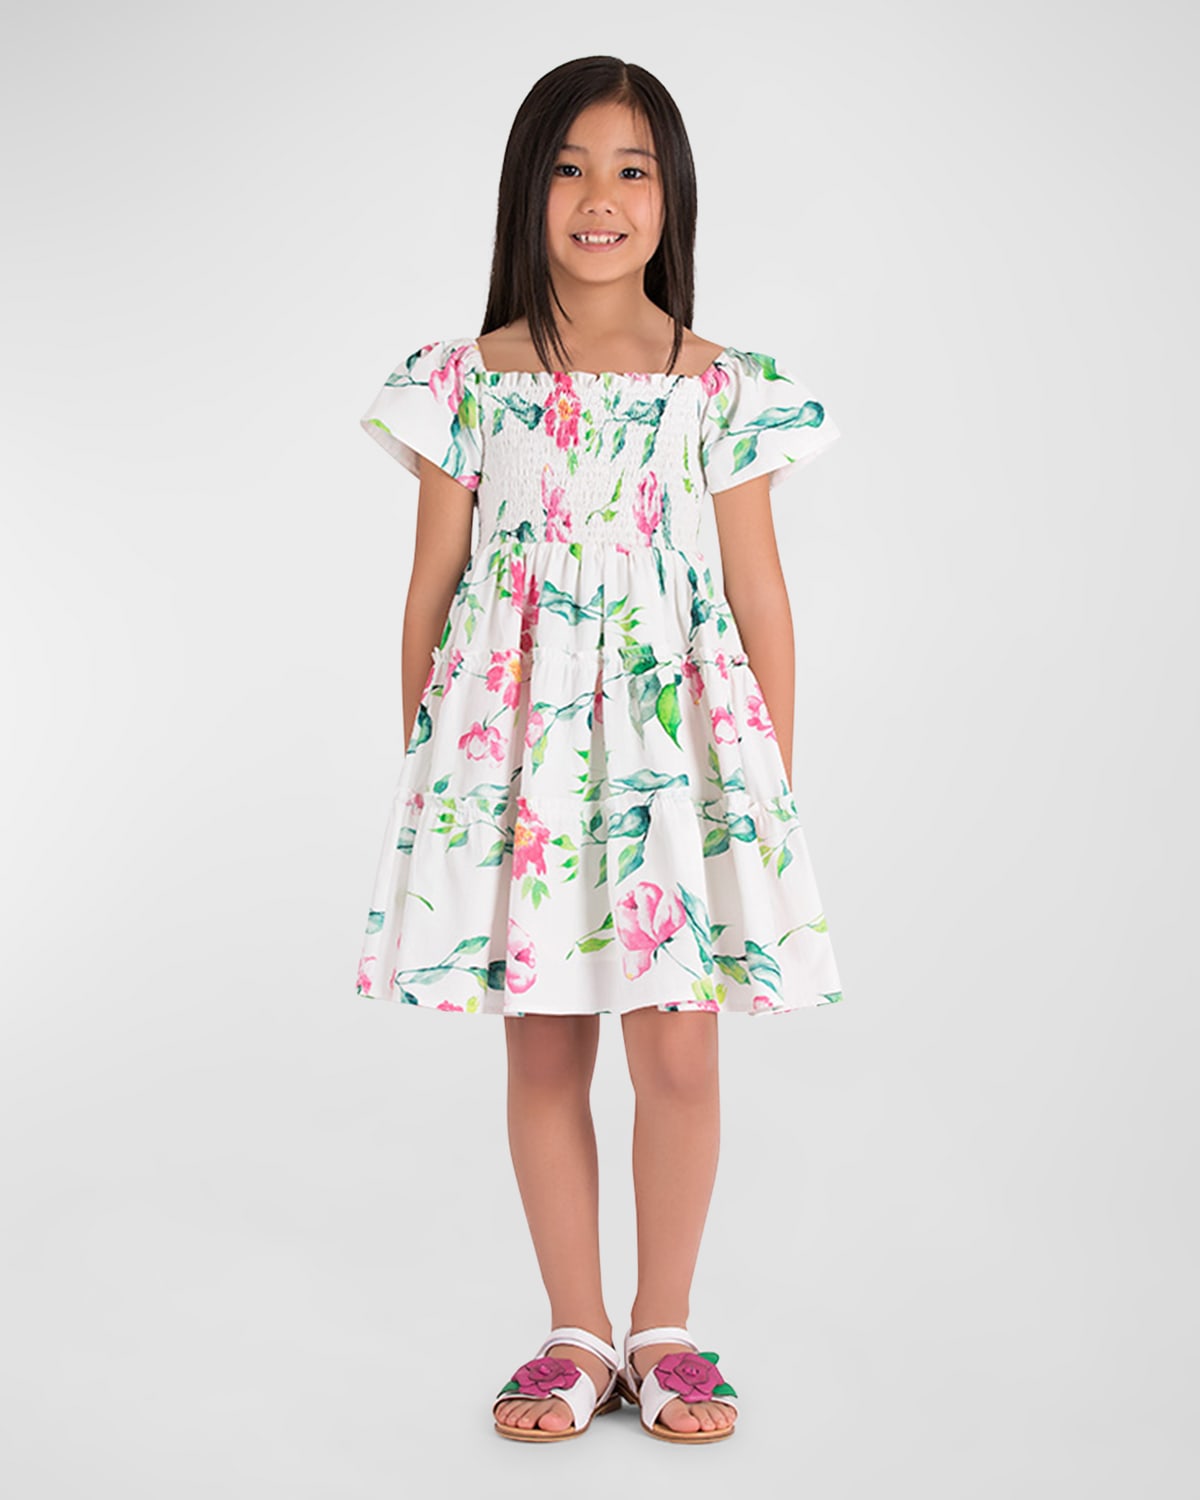 Mama Luma Kids' Girl's Floral Summer Smocked Cotton Mini Dress In White